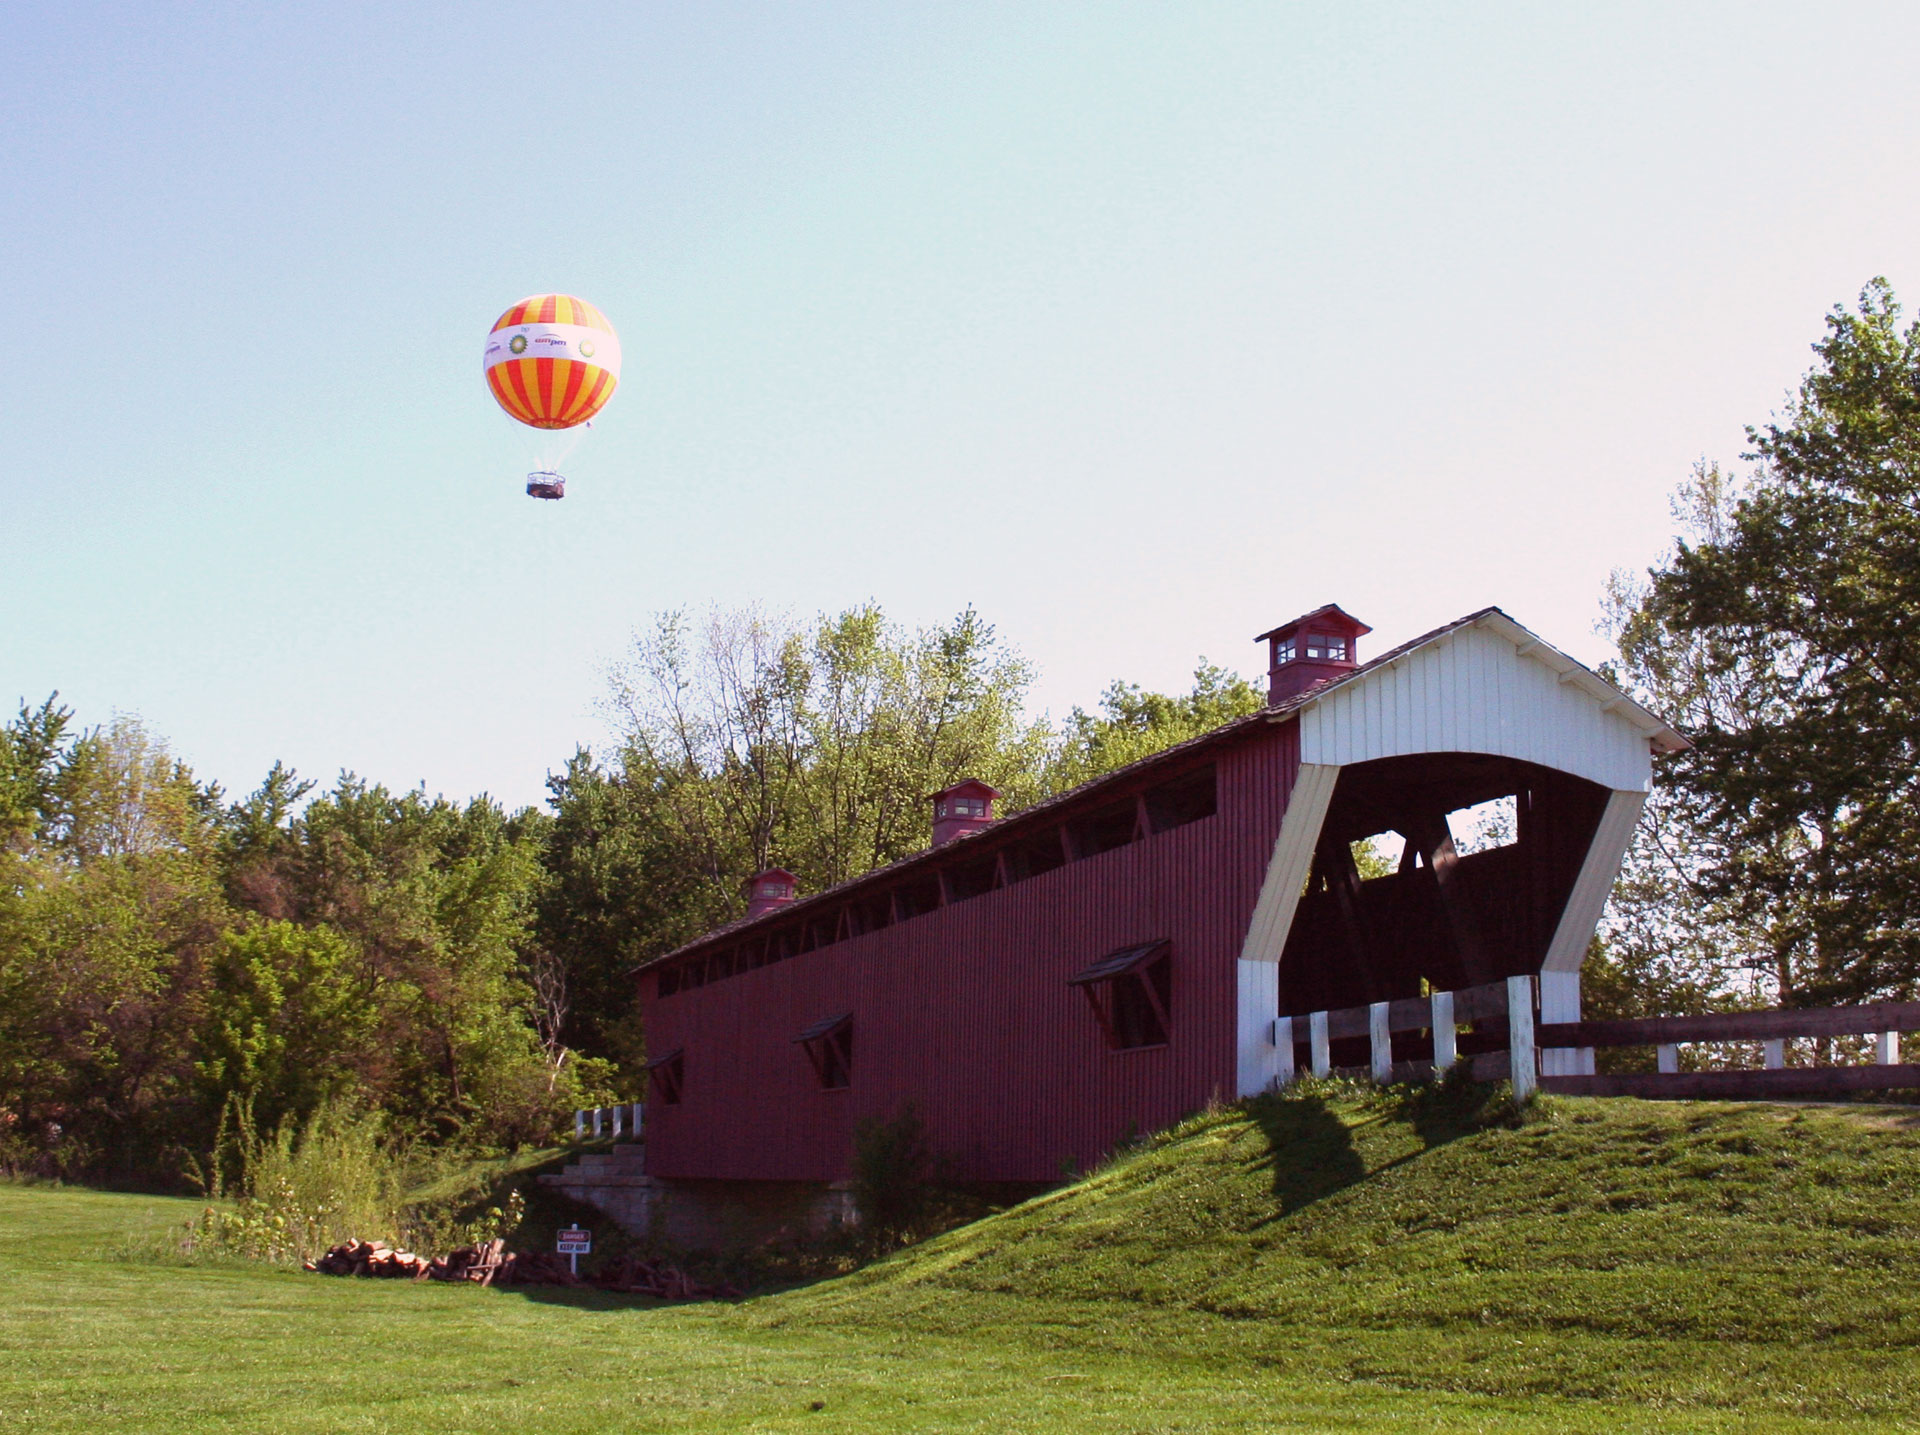 Conner Prairie 1859 Balloon Voyage PGAV